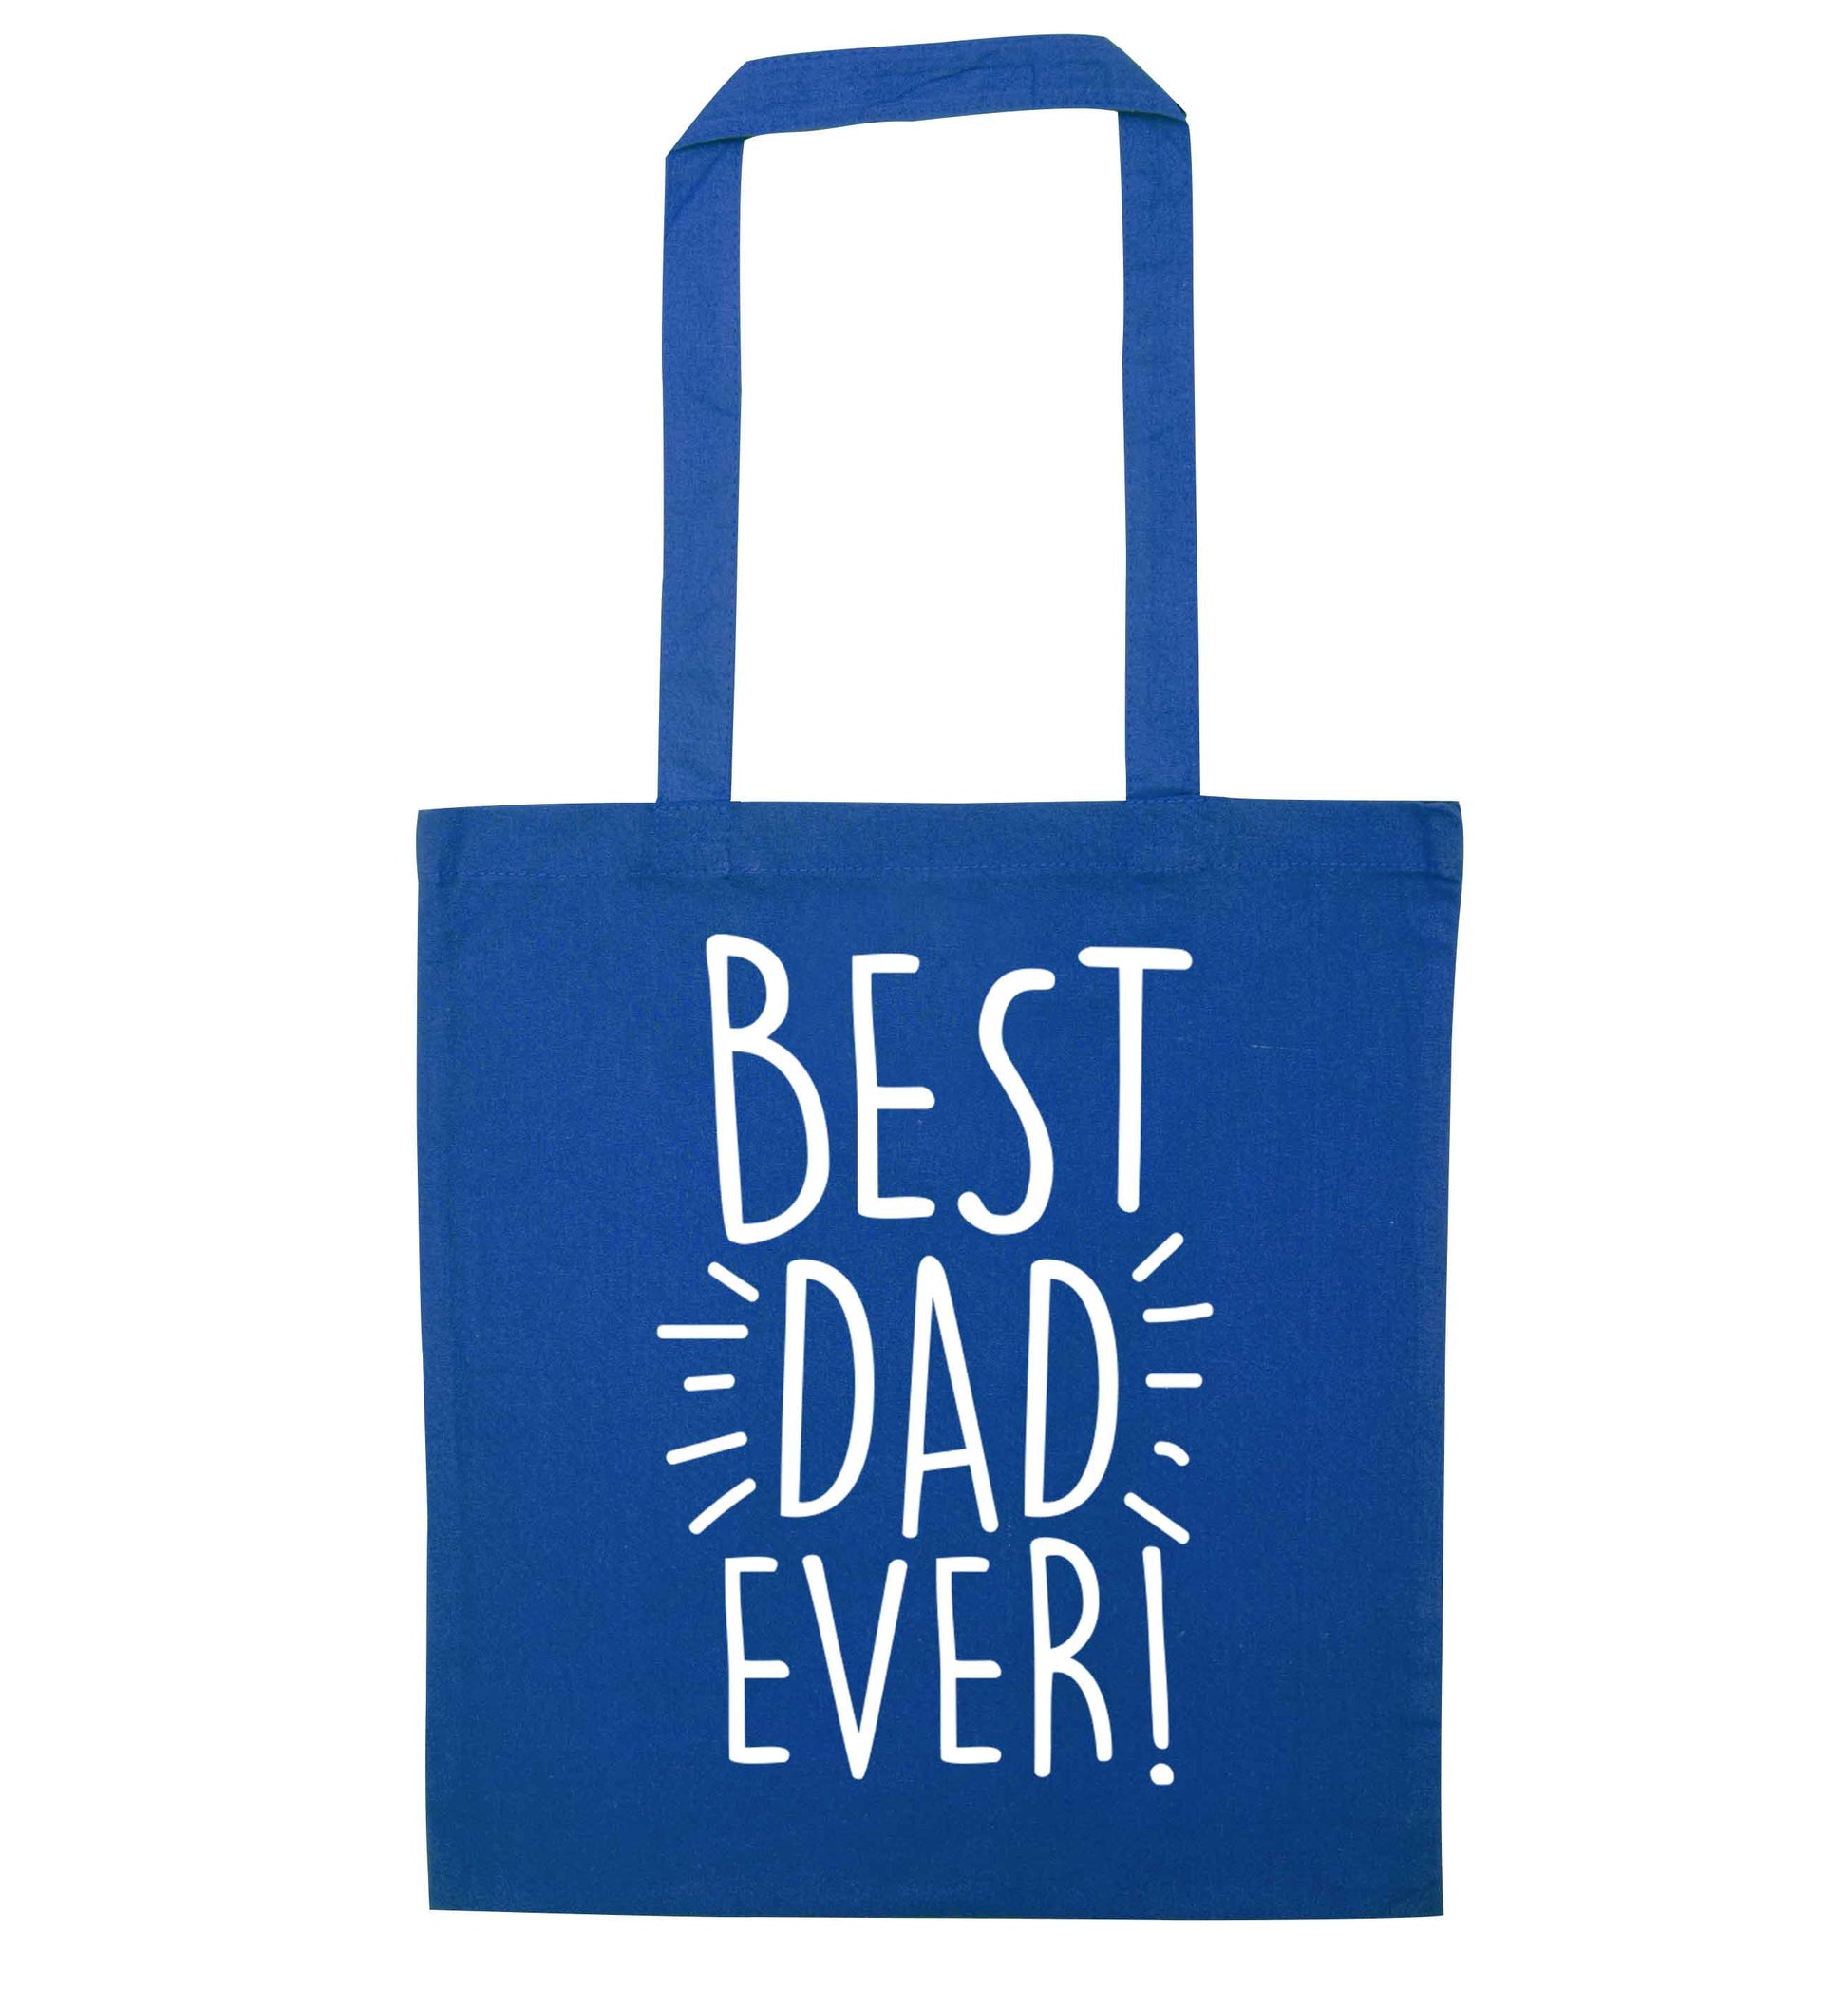 Best dad ever! blue tote bag